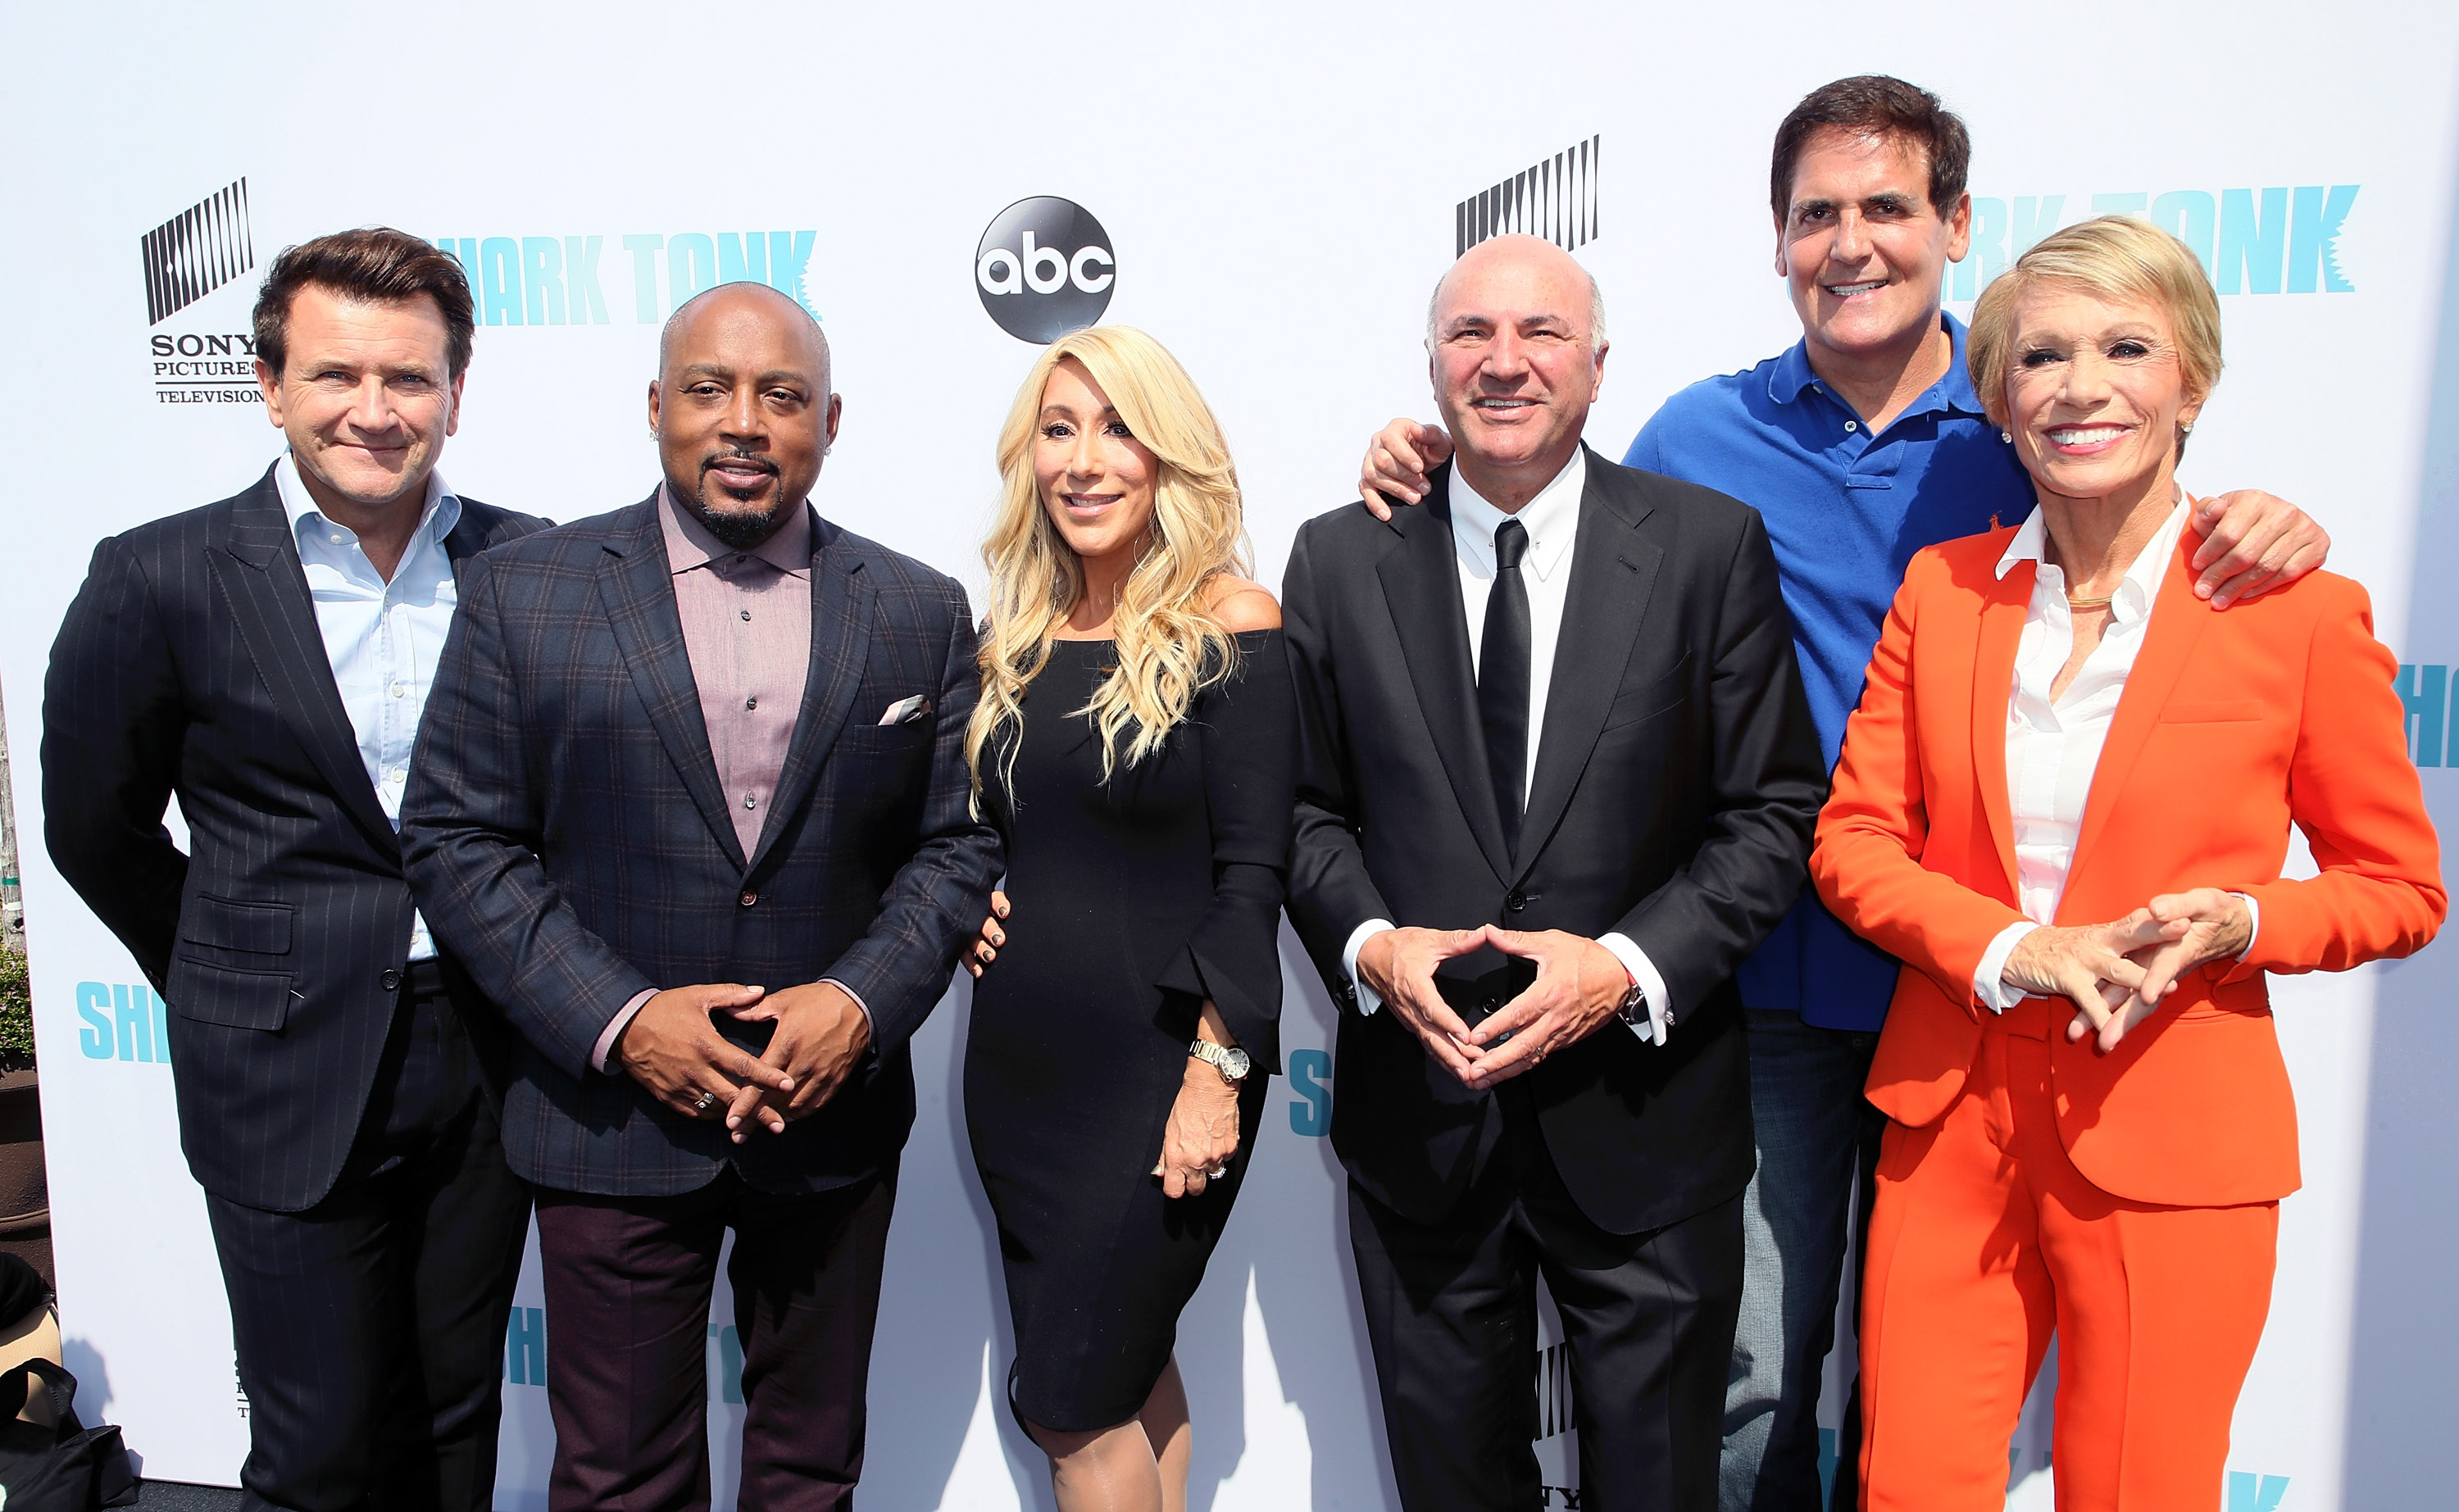 TV personalities Robert Herjavec, Daymond John, Lori Greiner, Kevin O'Leary, Mark Cuban and Barbara Corcoran attend the premiere of ABC's 'Shark Tank' Season 9